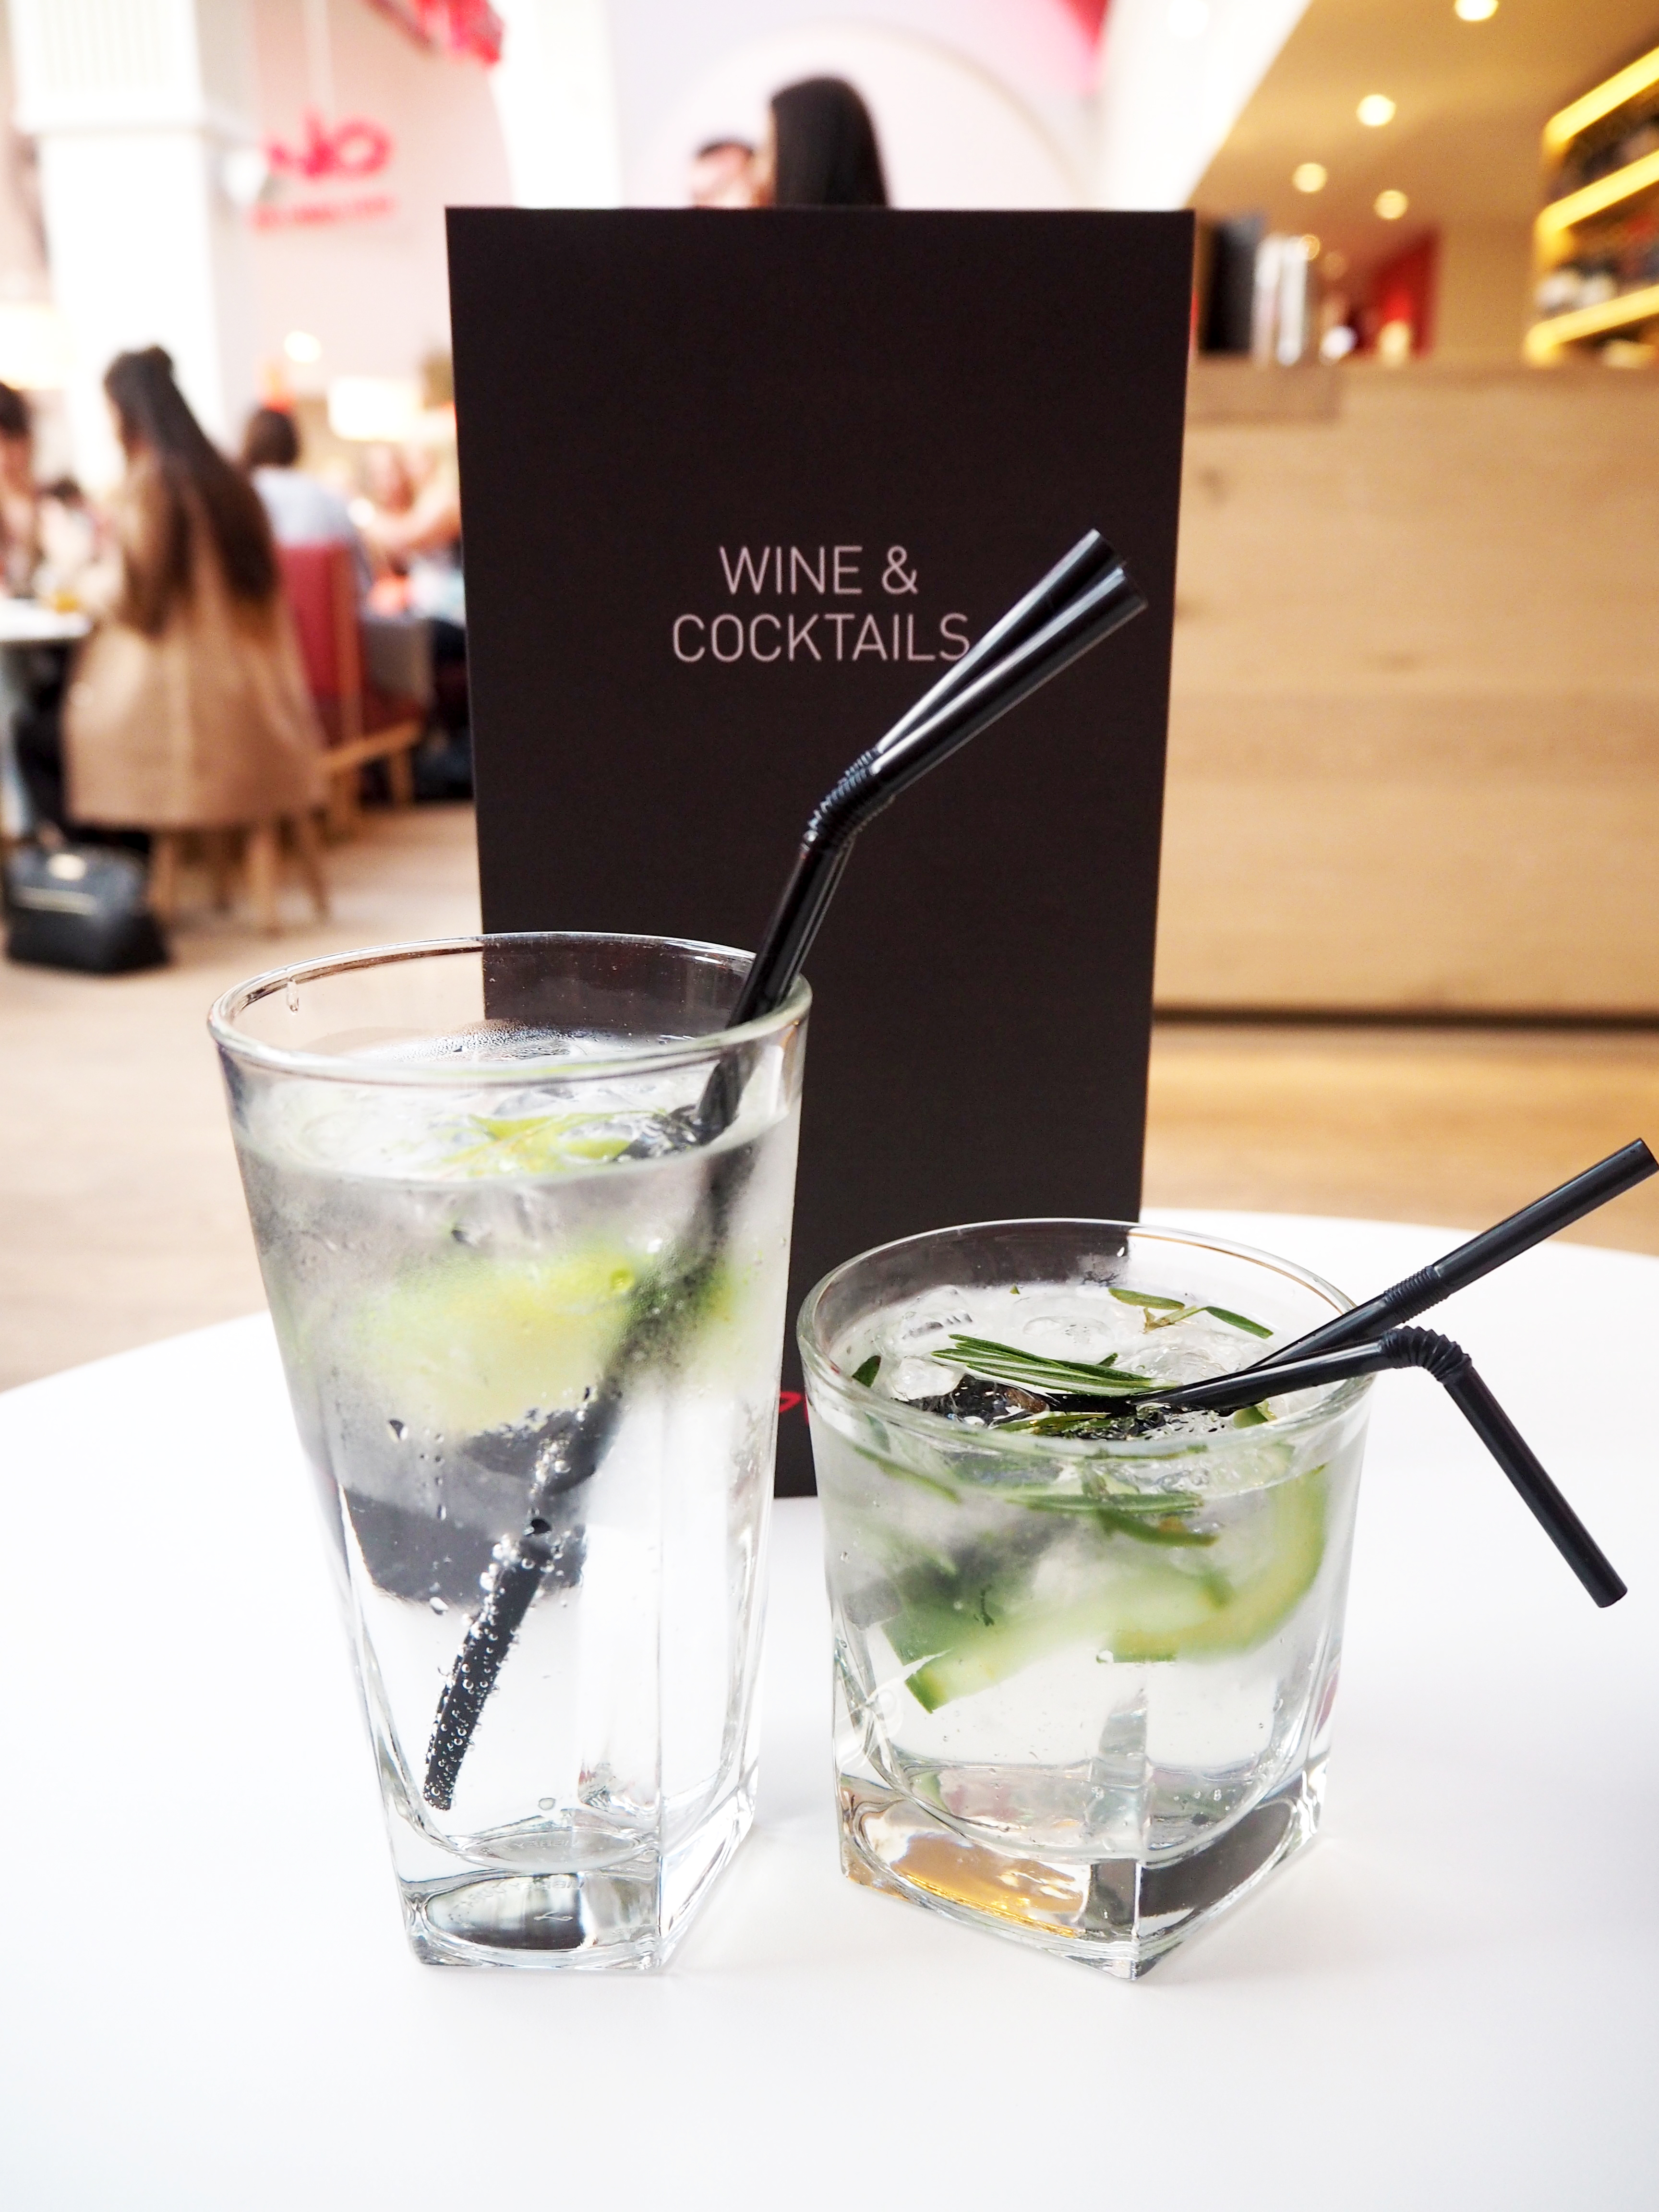 Vapiano UK new cocktail menu launch - Manchester event & review